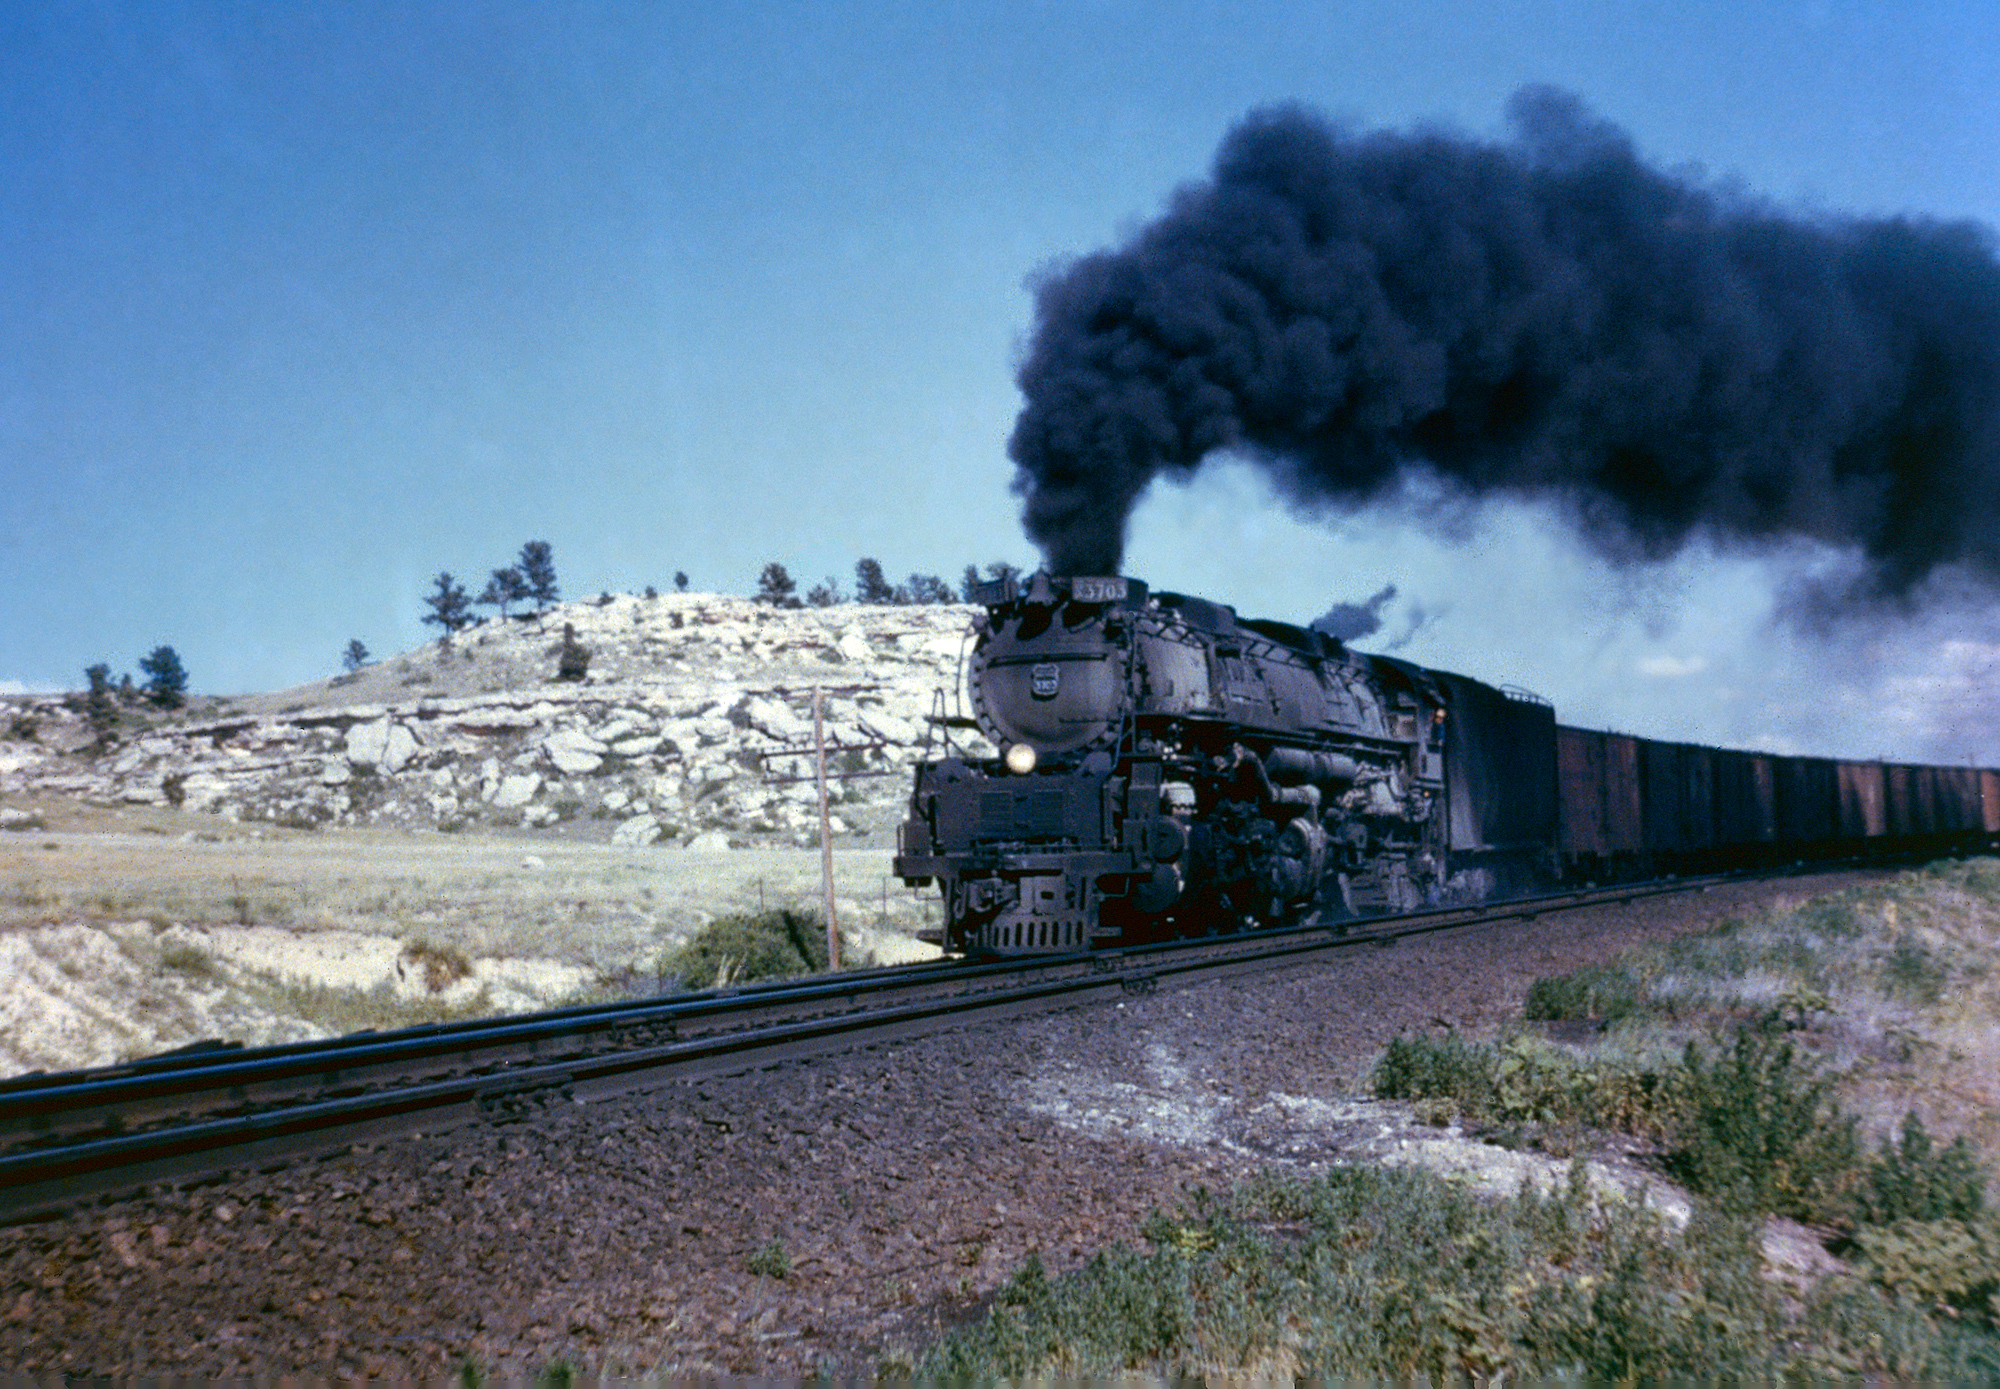 Railroad History In The USA